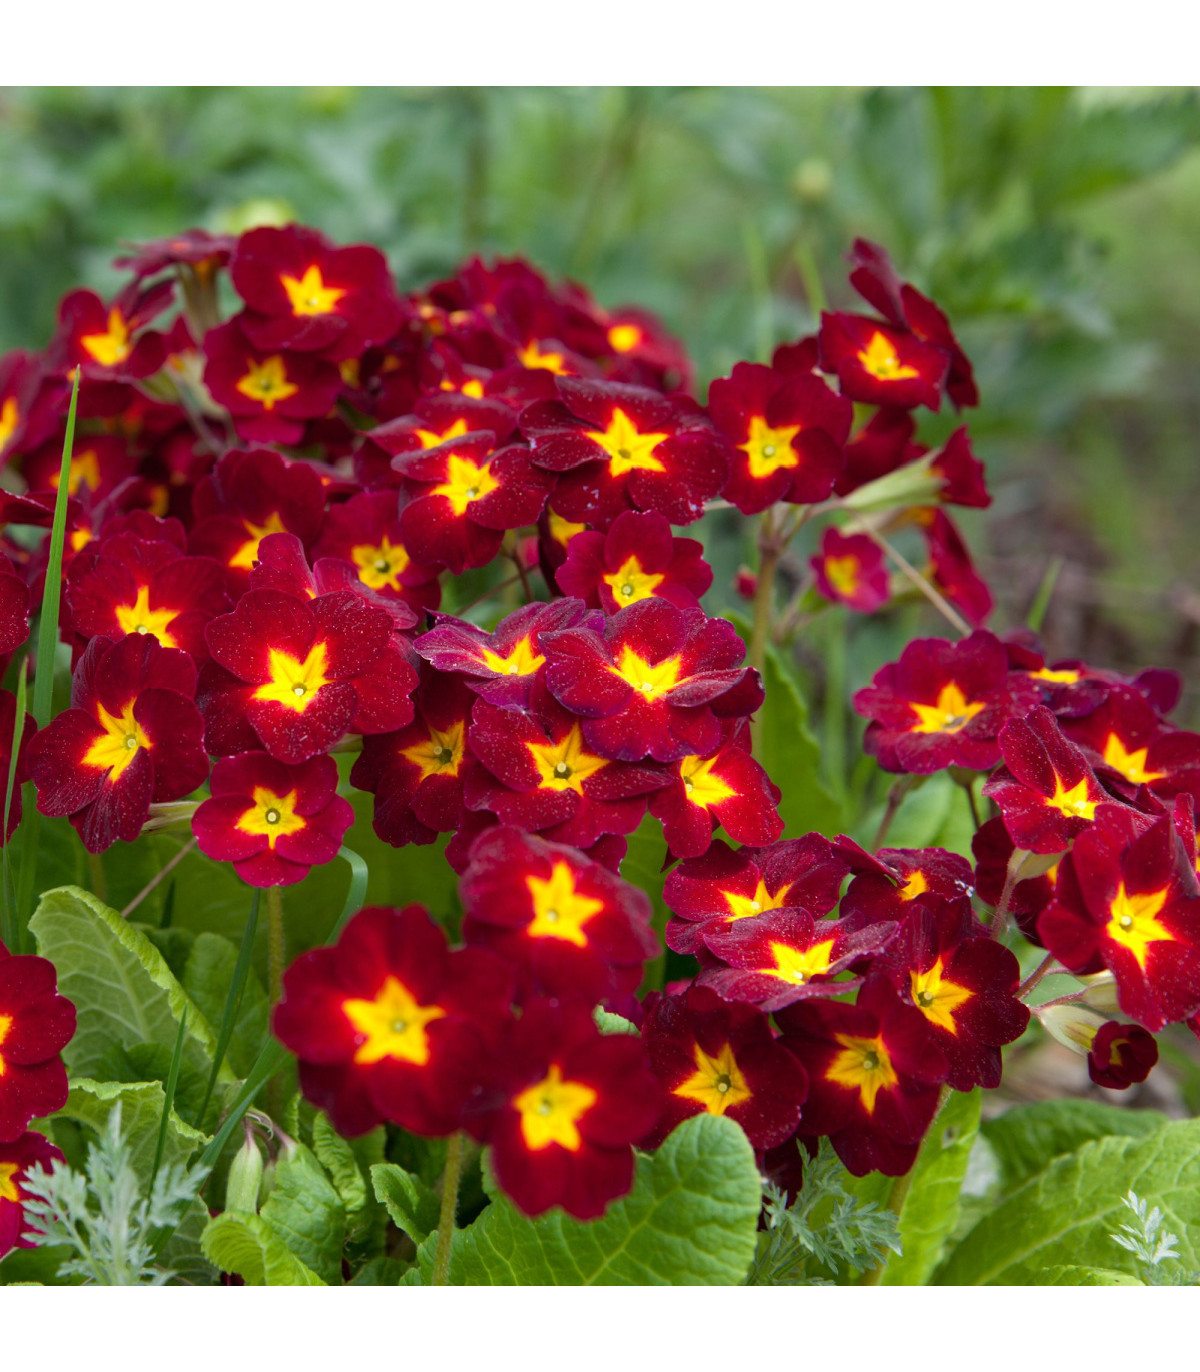 Prvosienka Inara F1 Late Red - Primula elatior - predaj semien - 20 ks